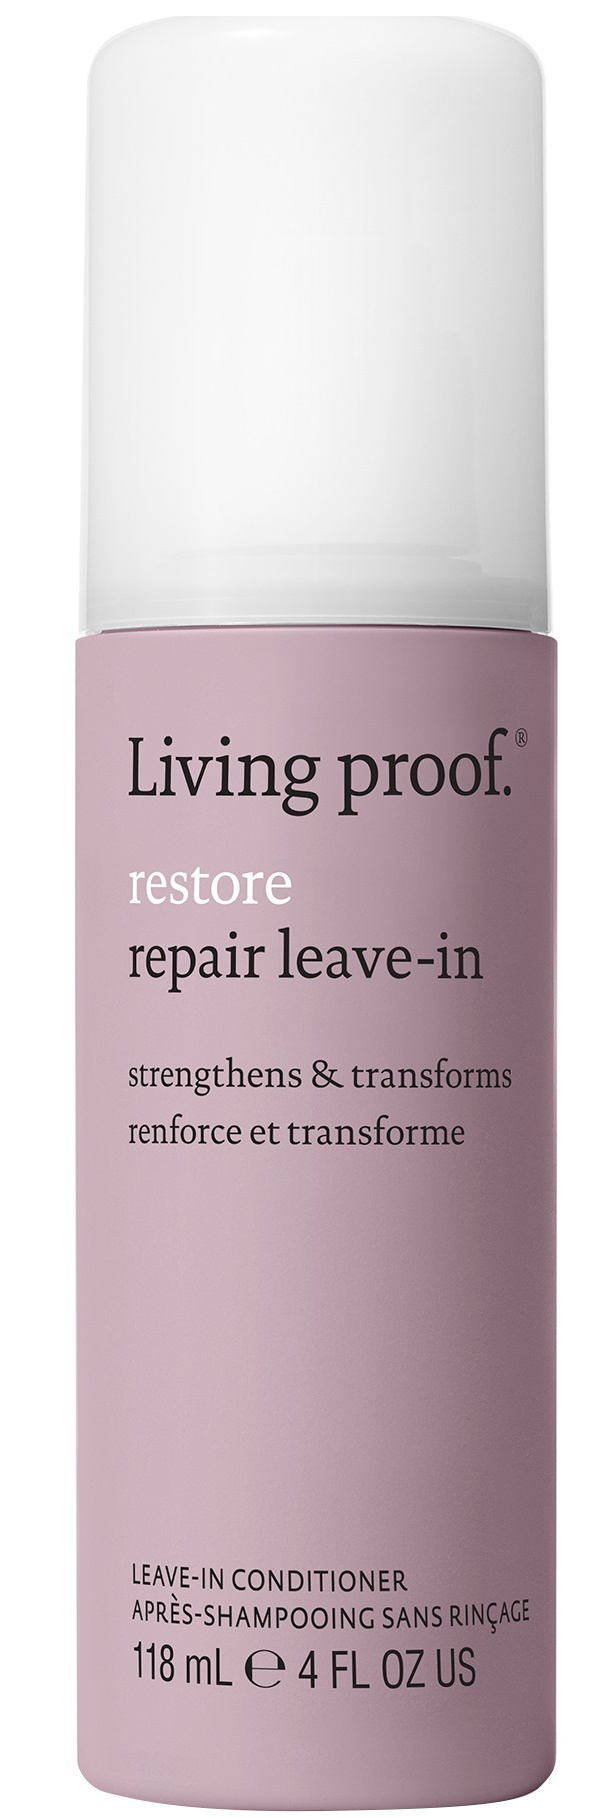 Living proof Restore Repair Leave-in